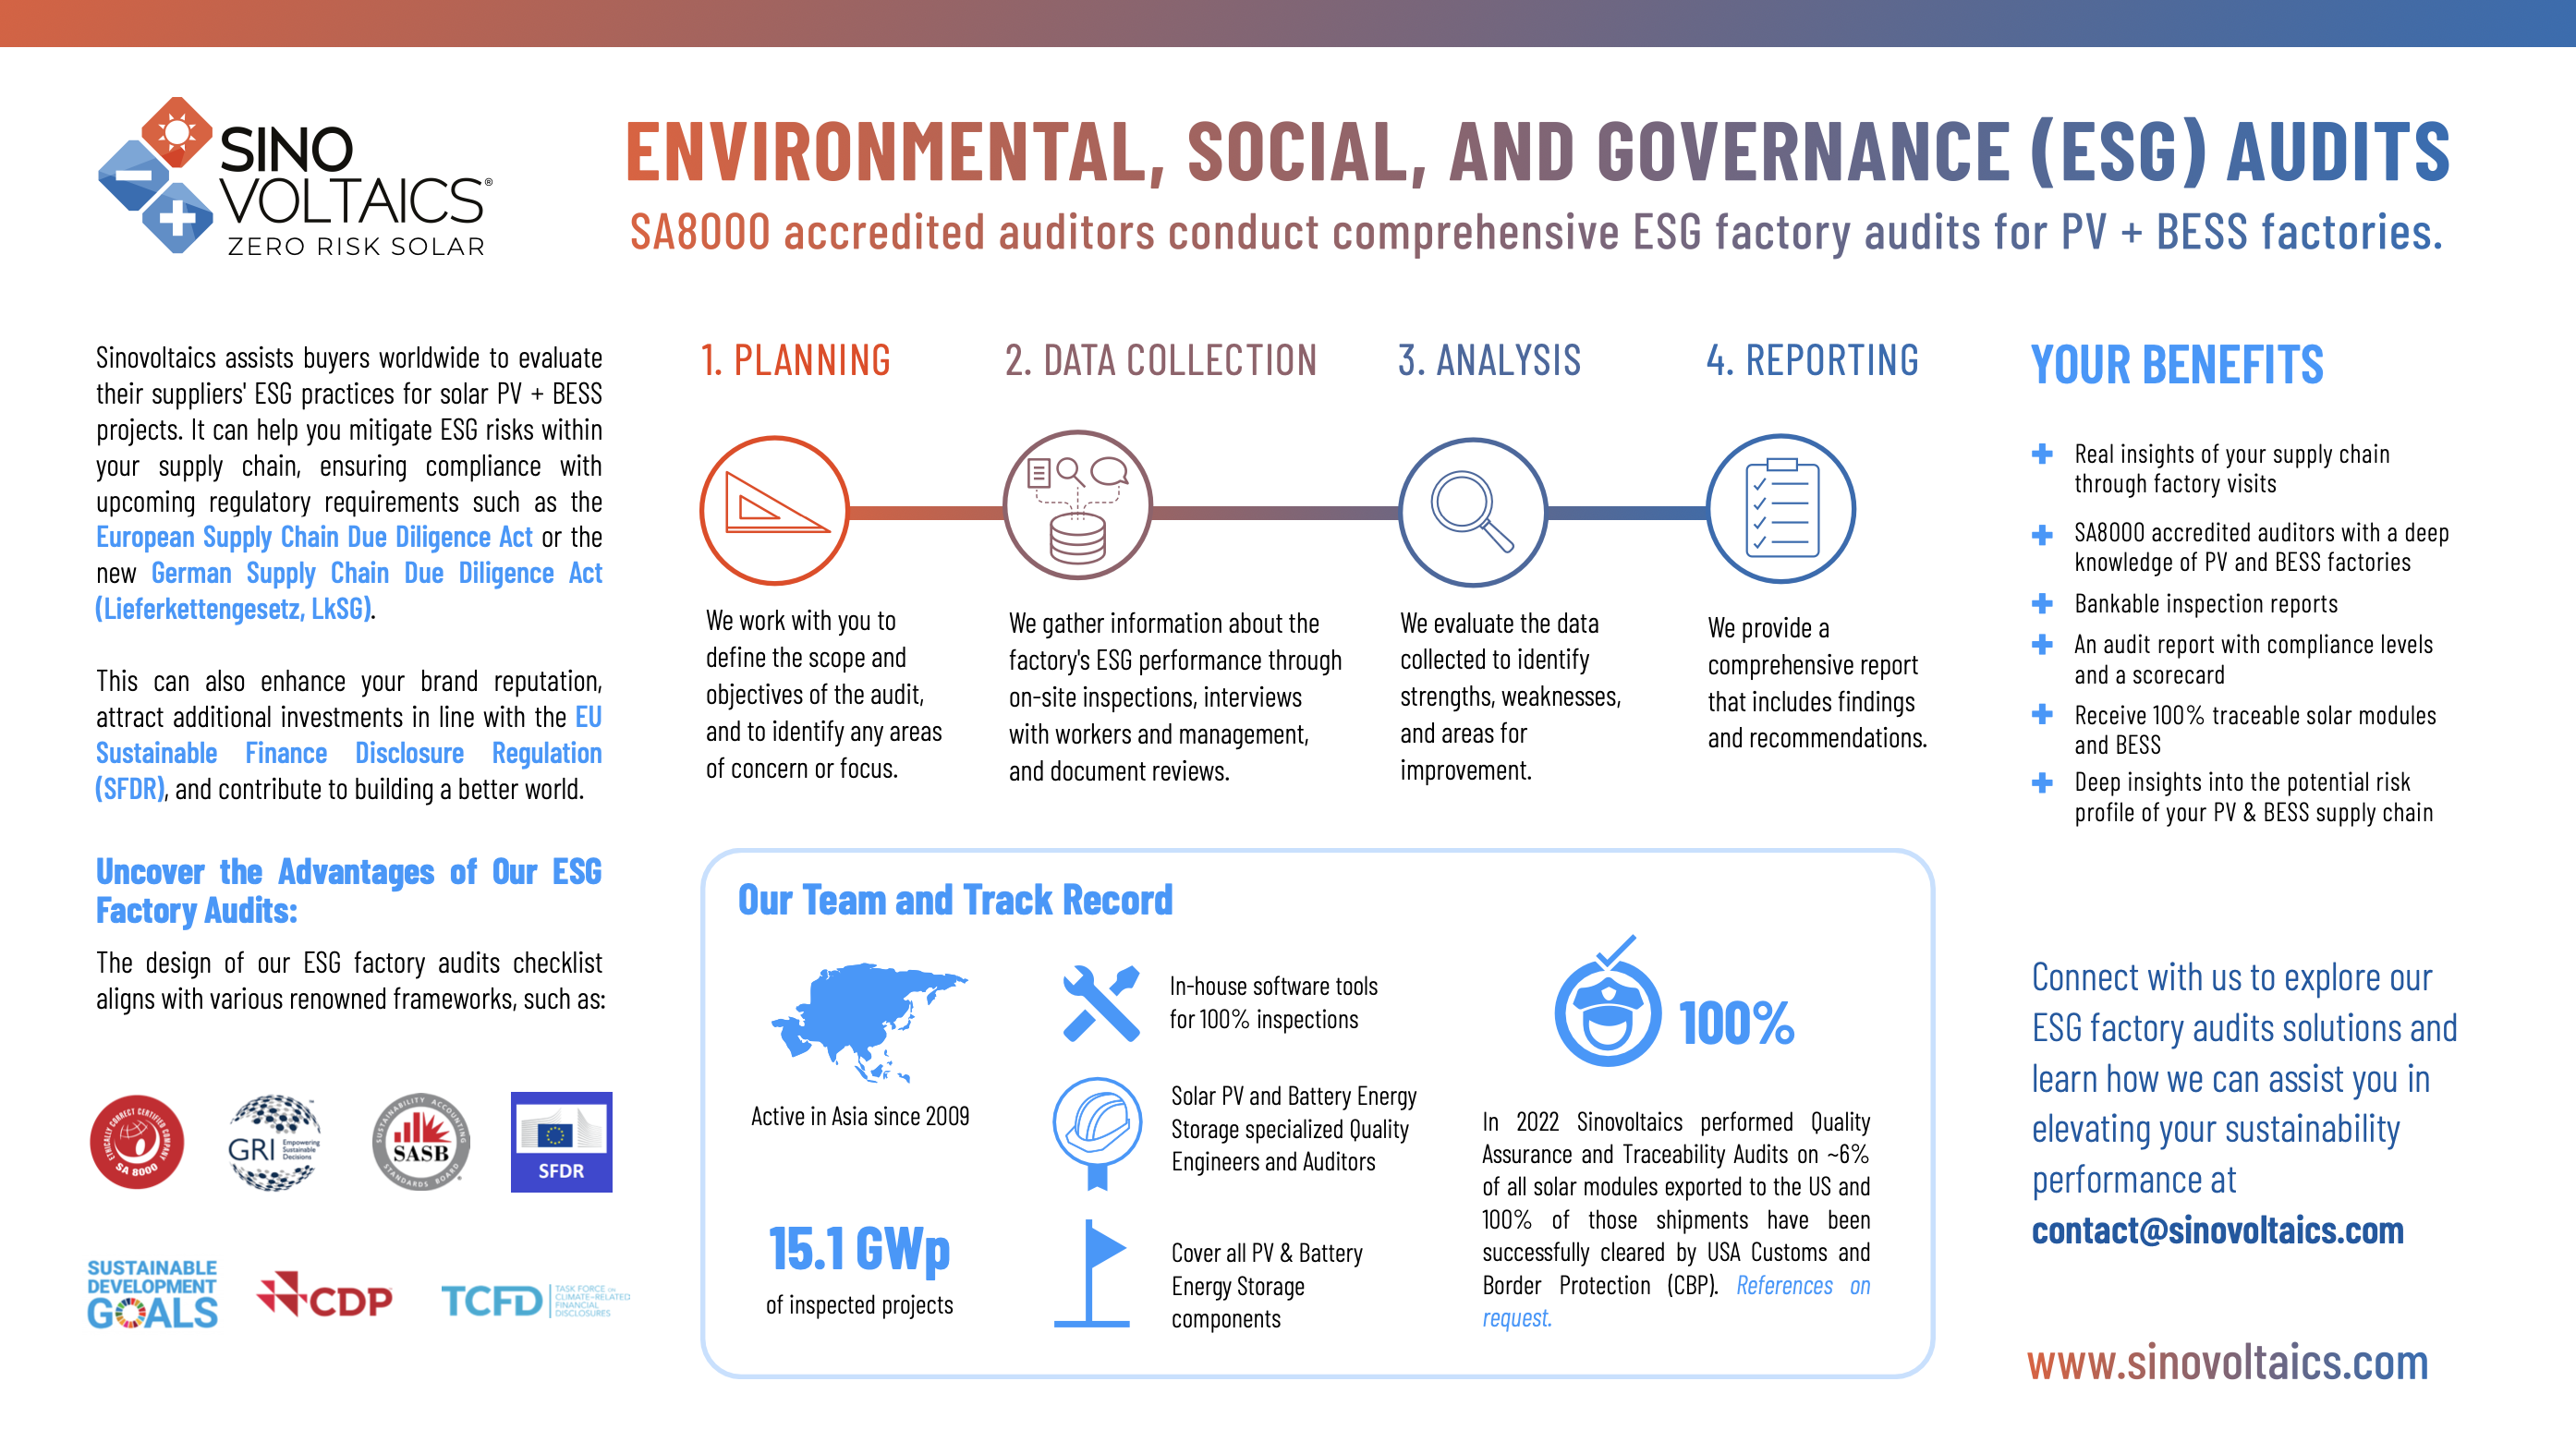 Sinovoltaics Brochure: Environmental, Social, and Governance (ESG) Audits